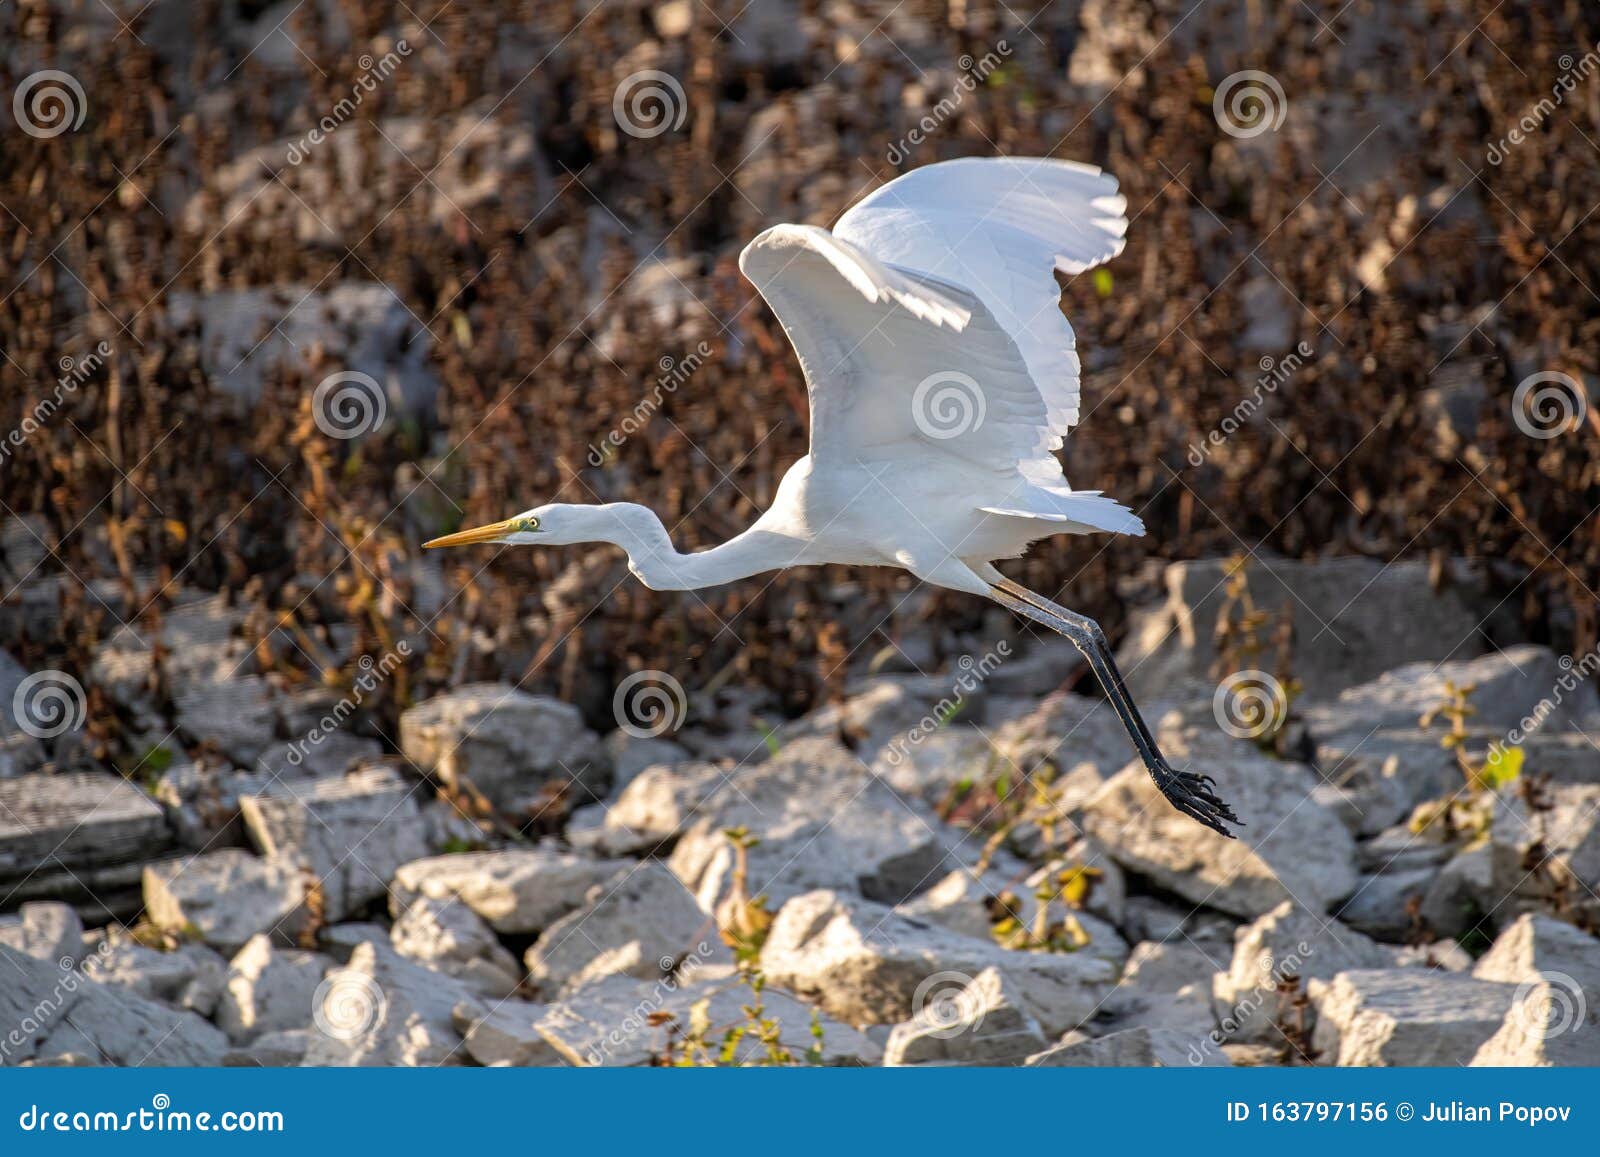 white heron flying over the beach water ardea alba, pelecaniforme ardeidae